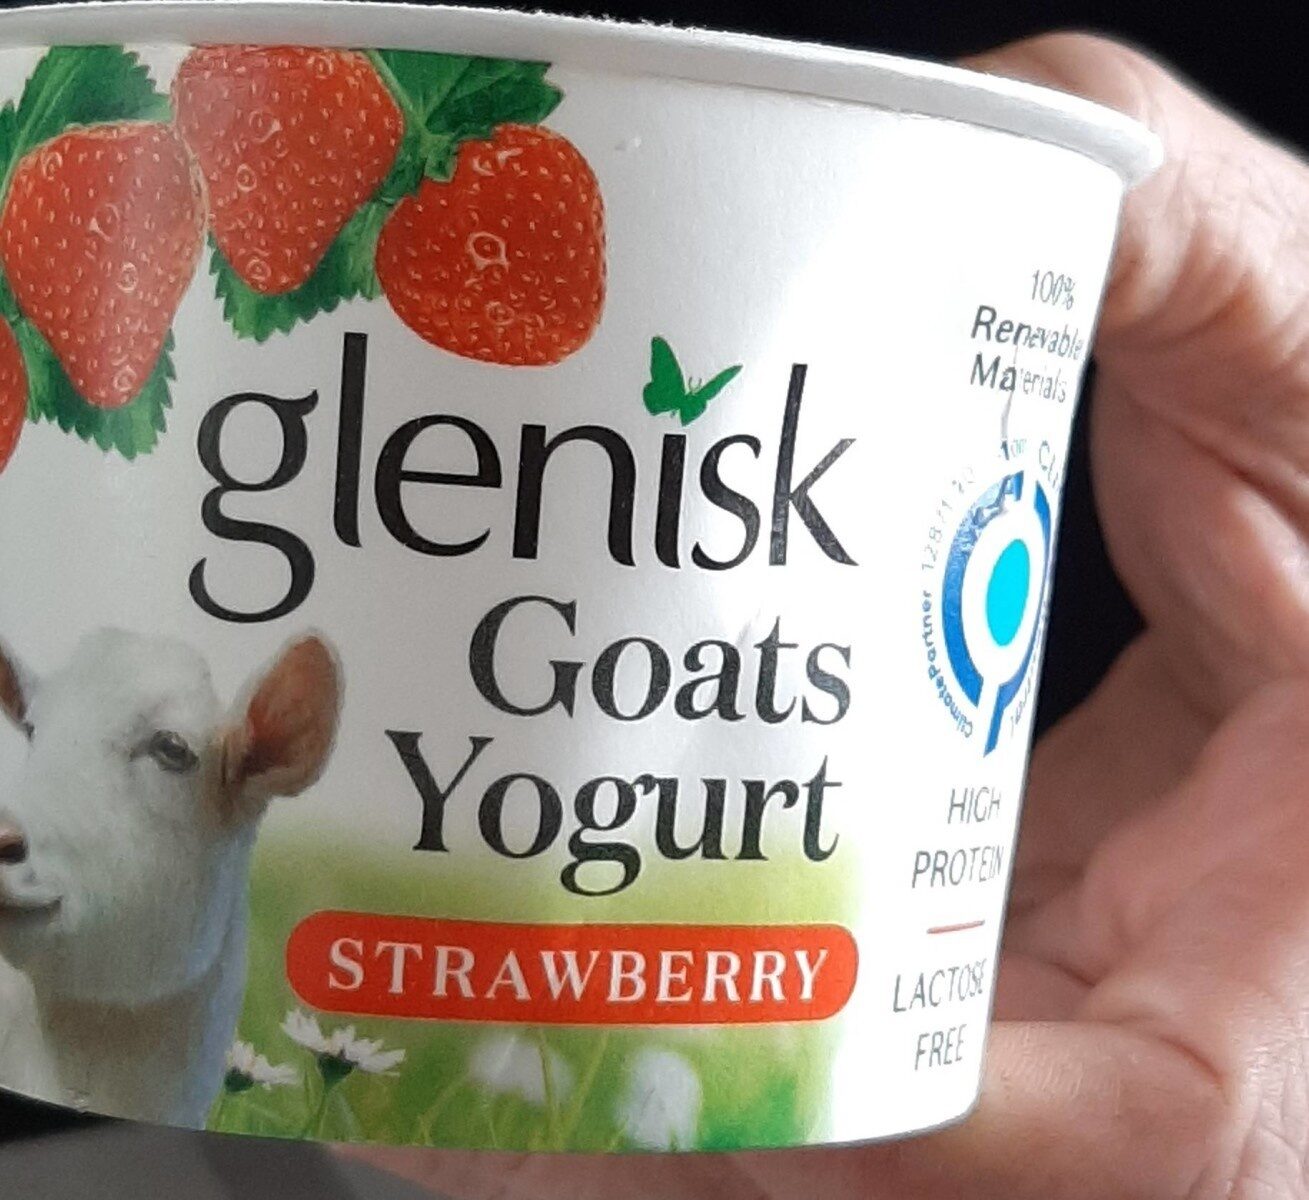 goats yoghurt - Product